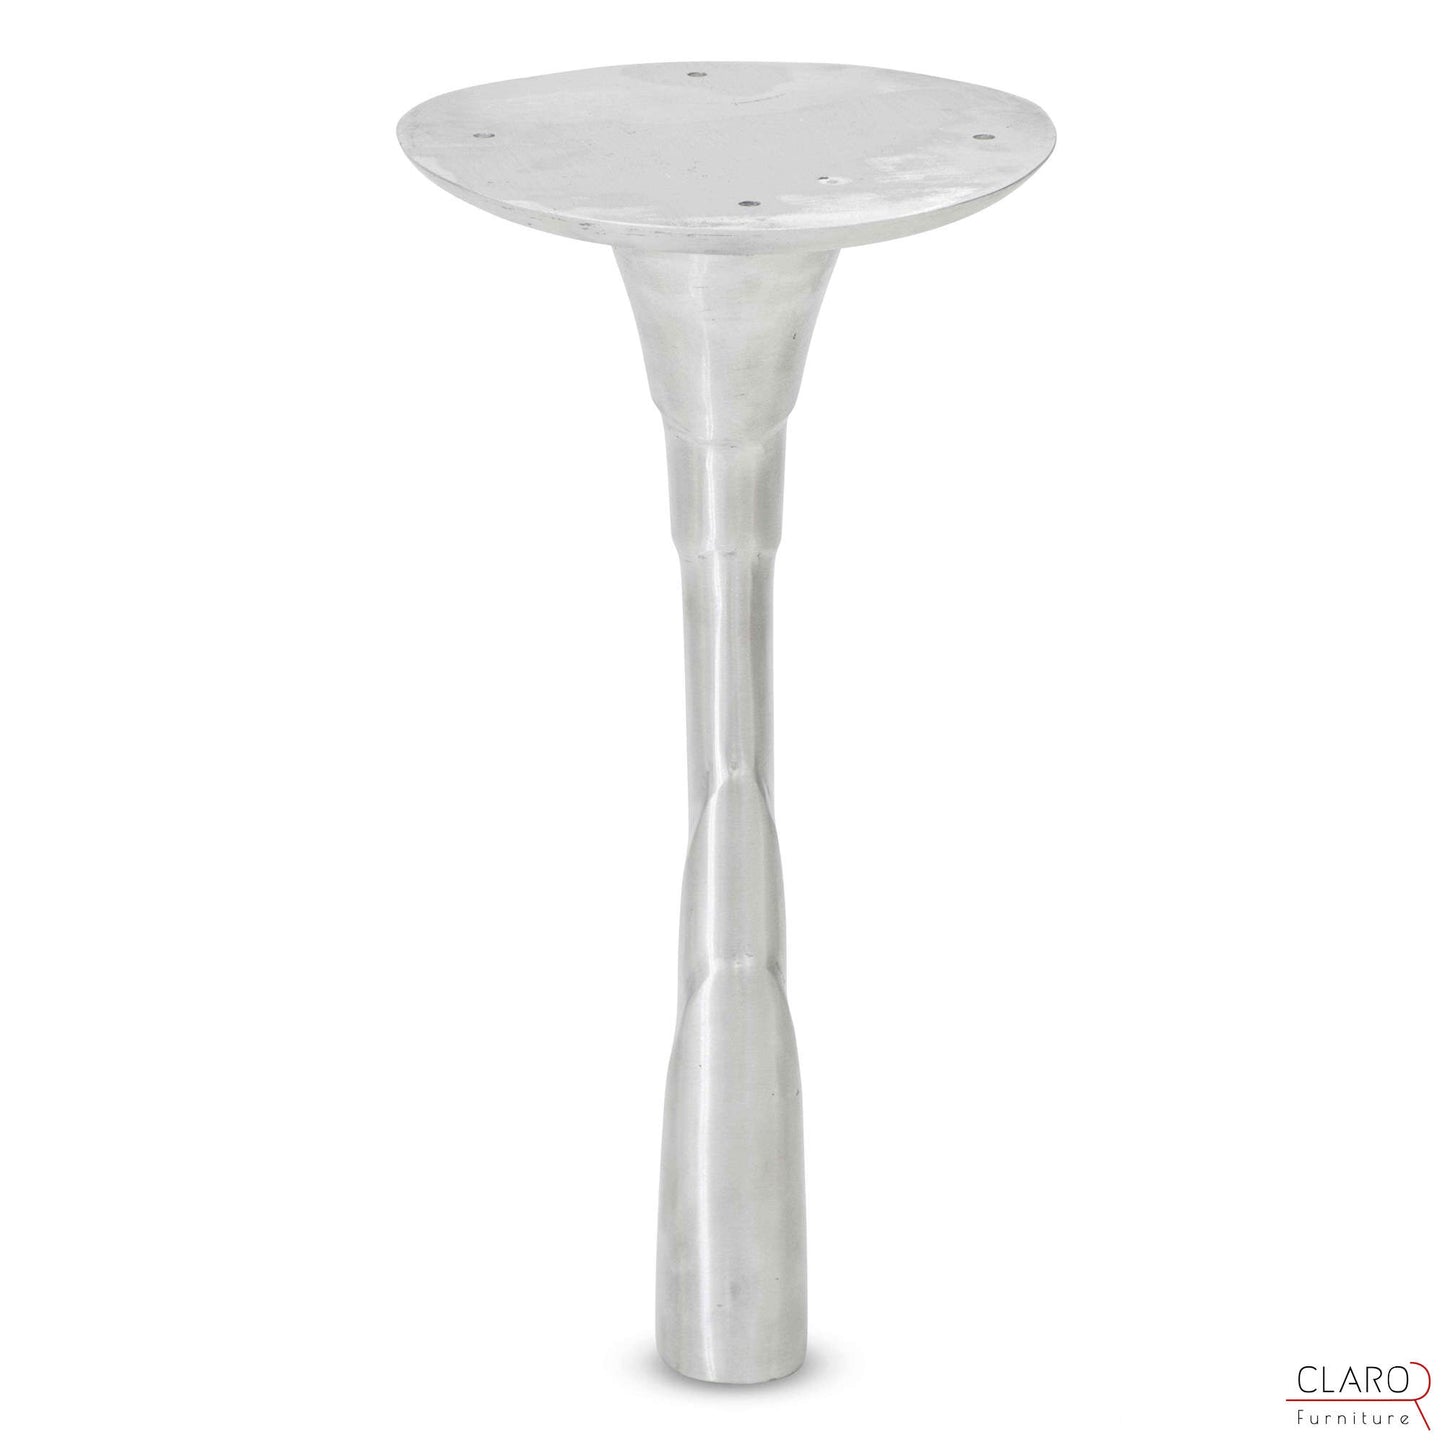 Aluminium Sand Cast Coffee Table Leg (set of 4)